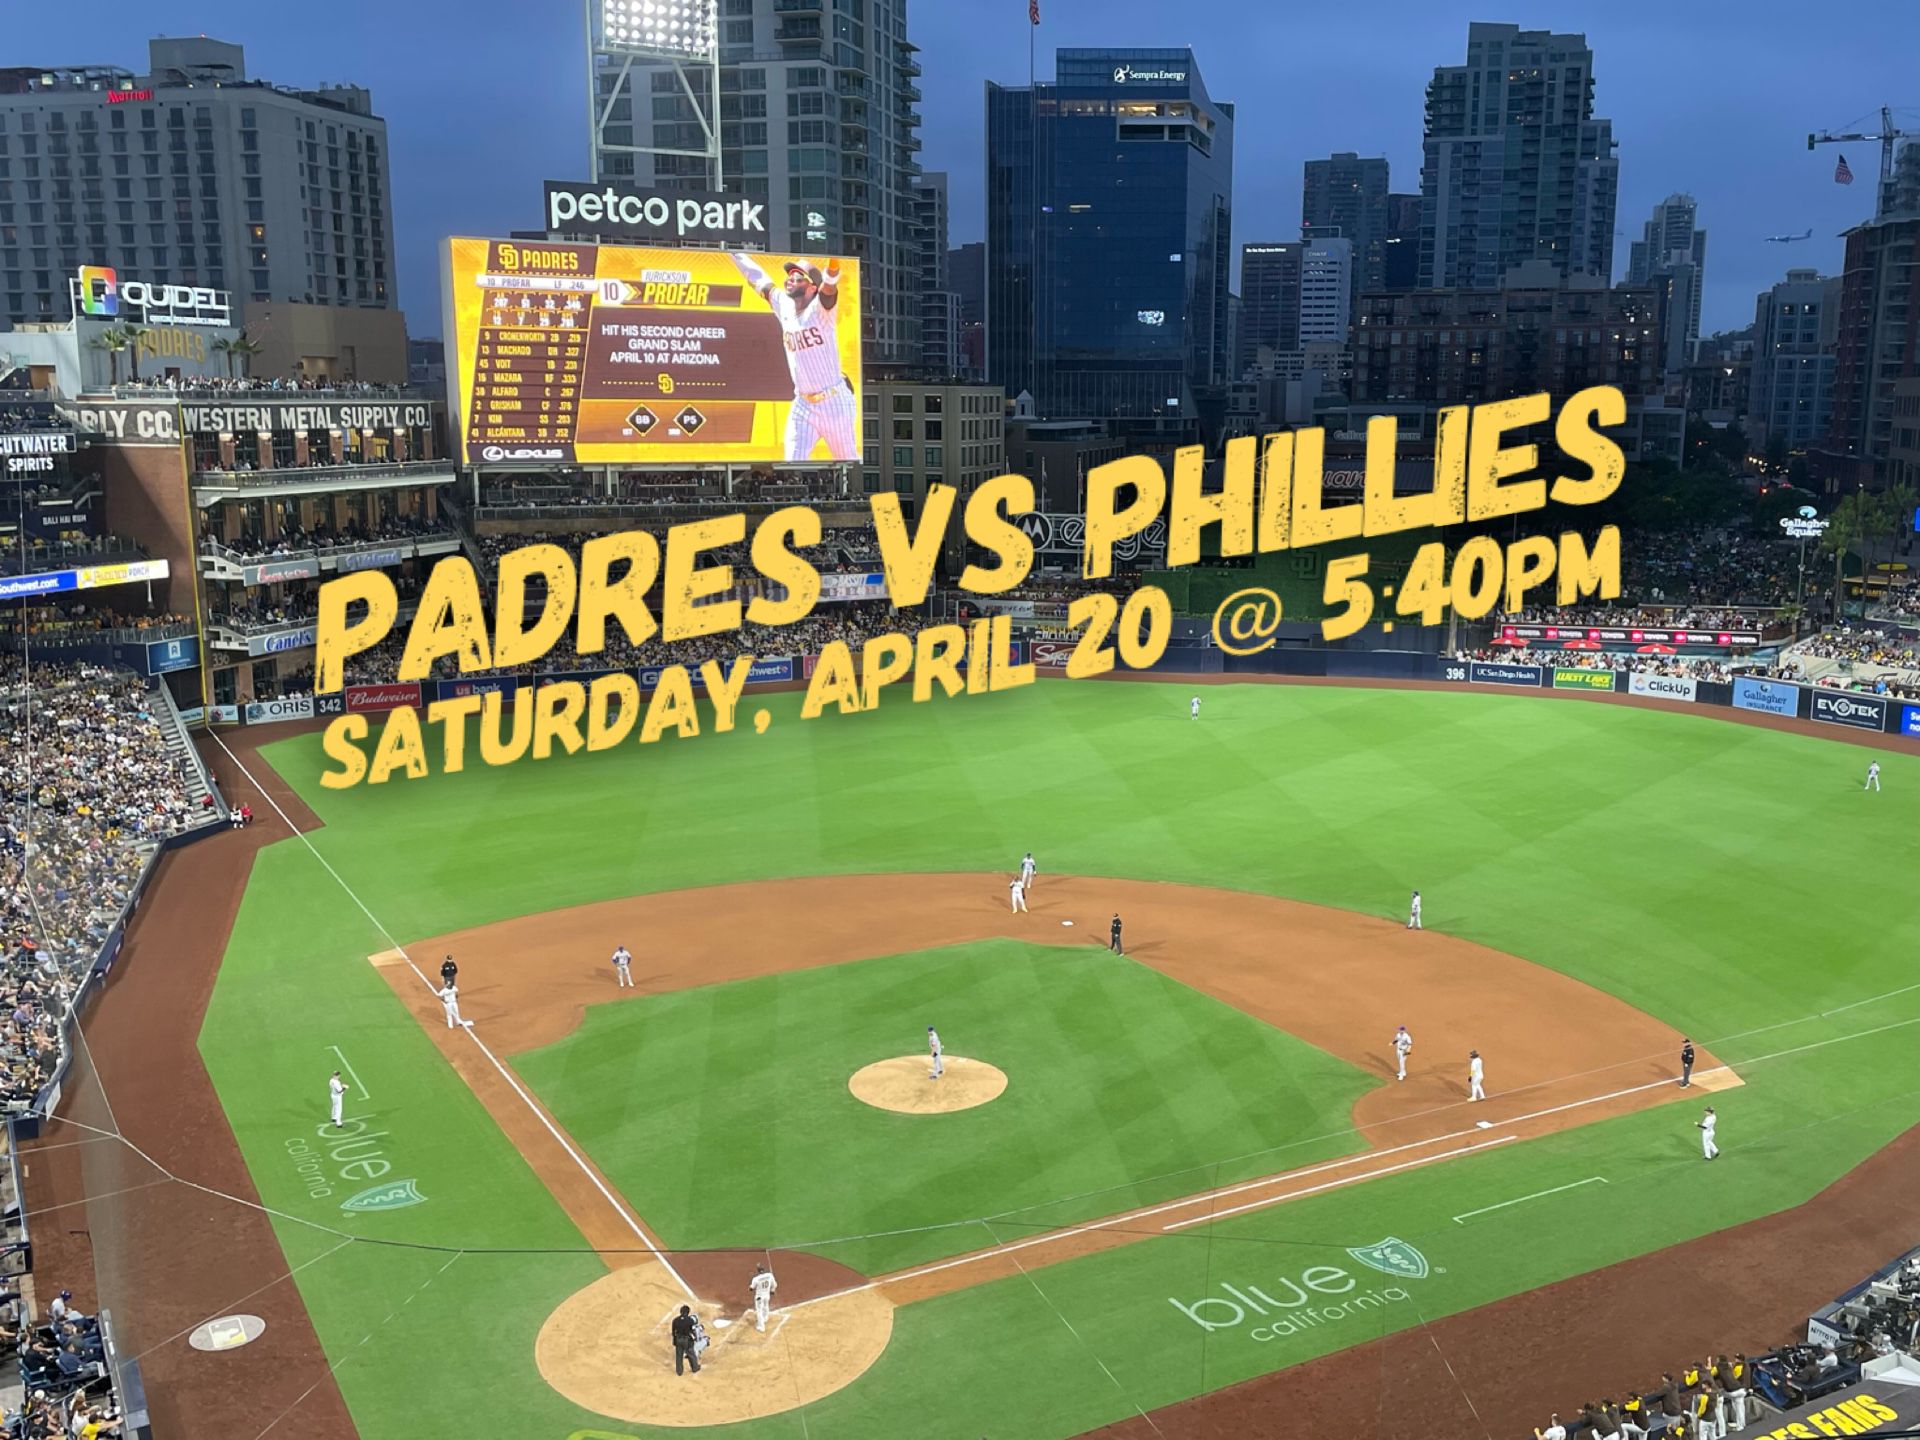 Padres vs Phillies MLB Baseball Tickets - Saturday, April 27, 5:40pm